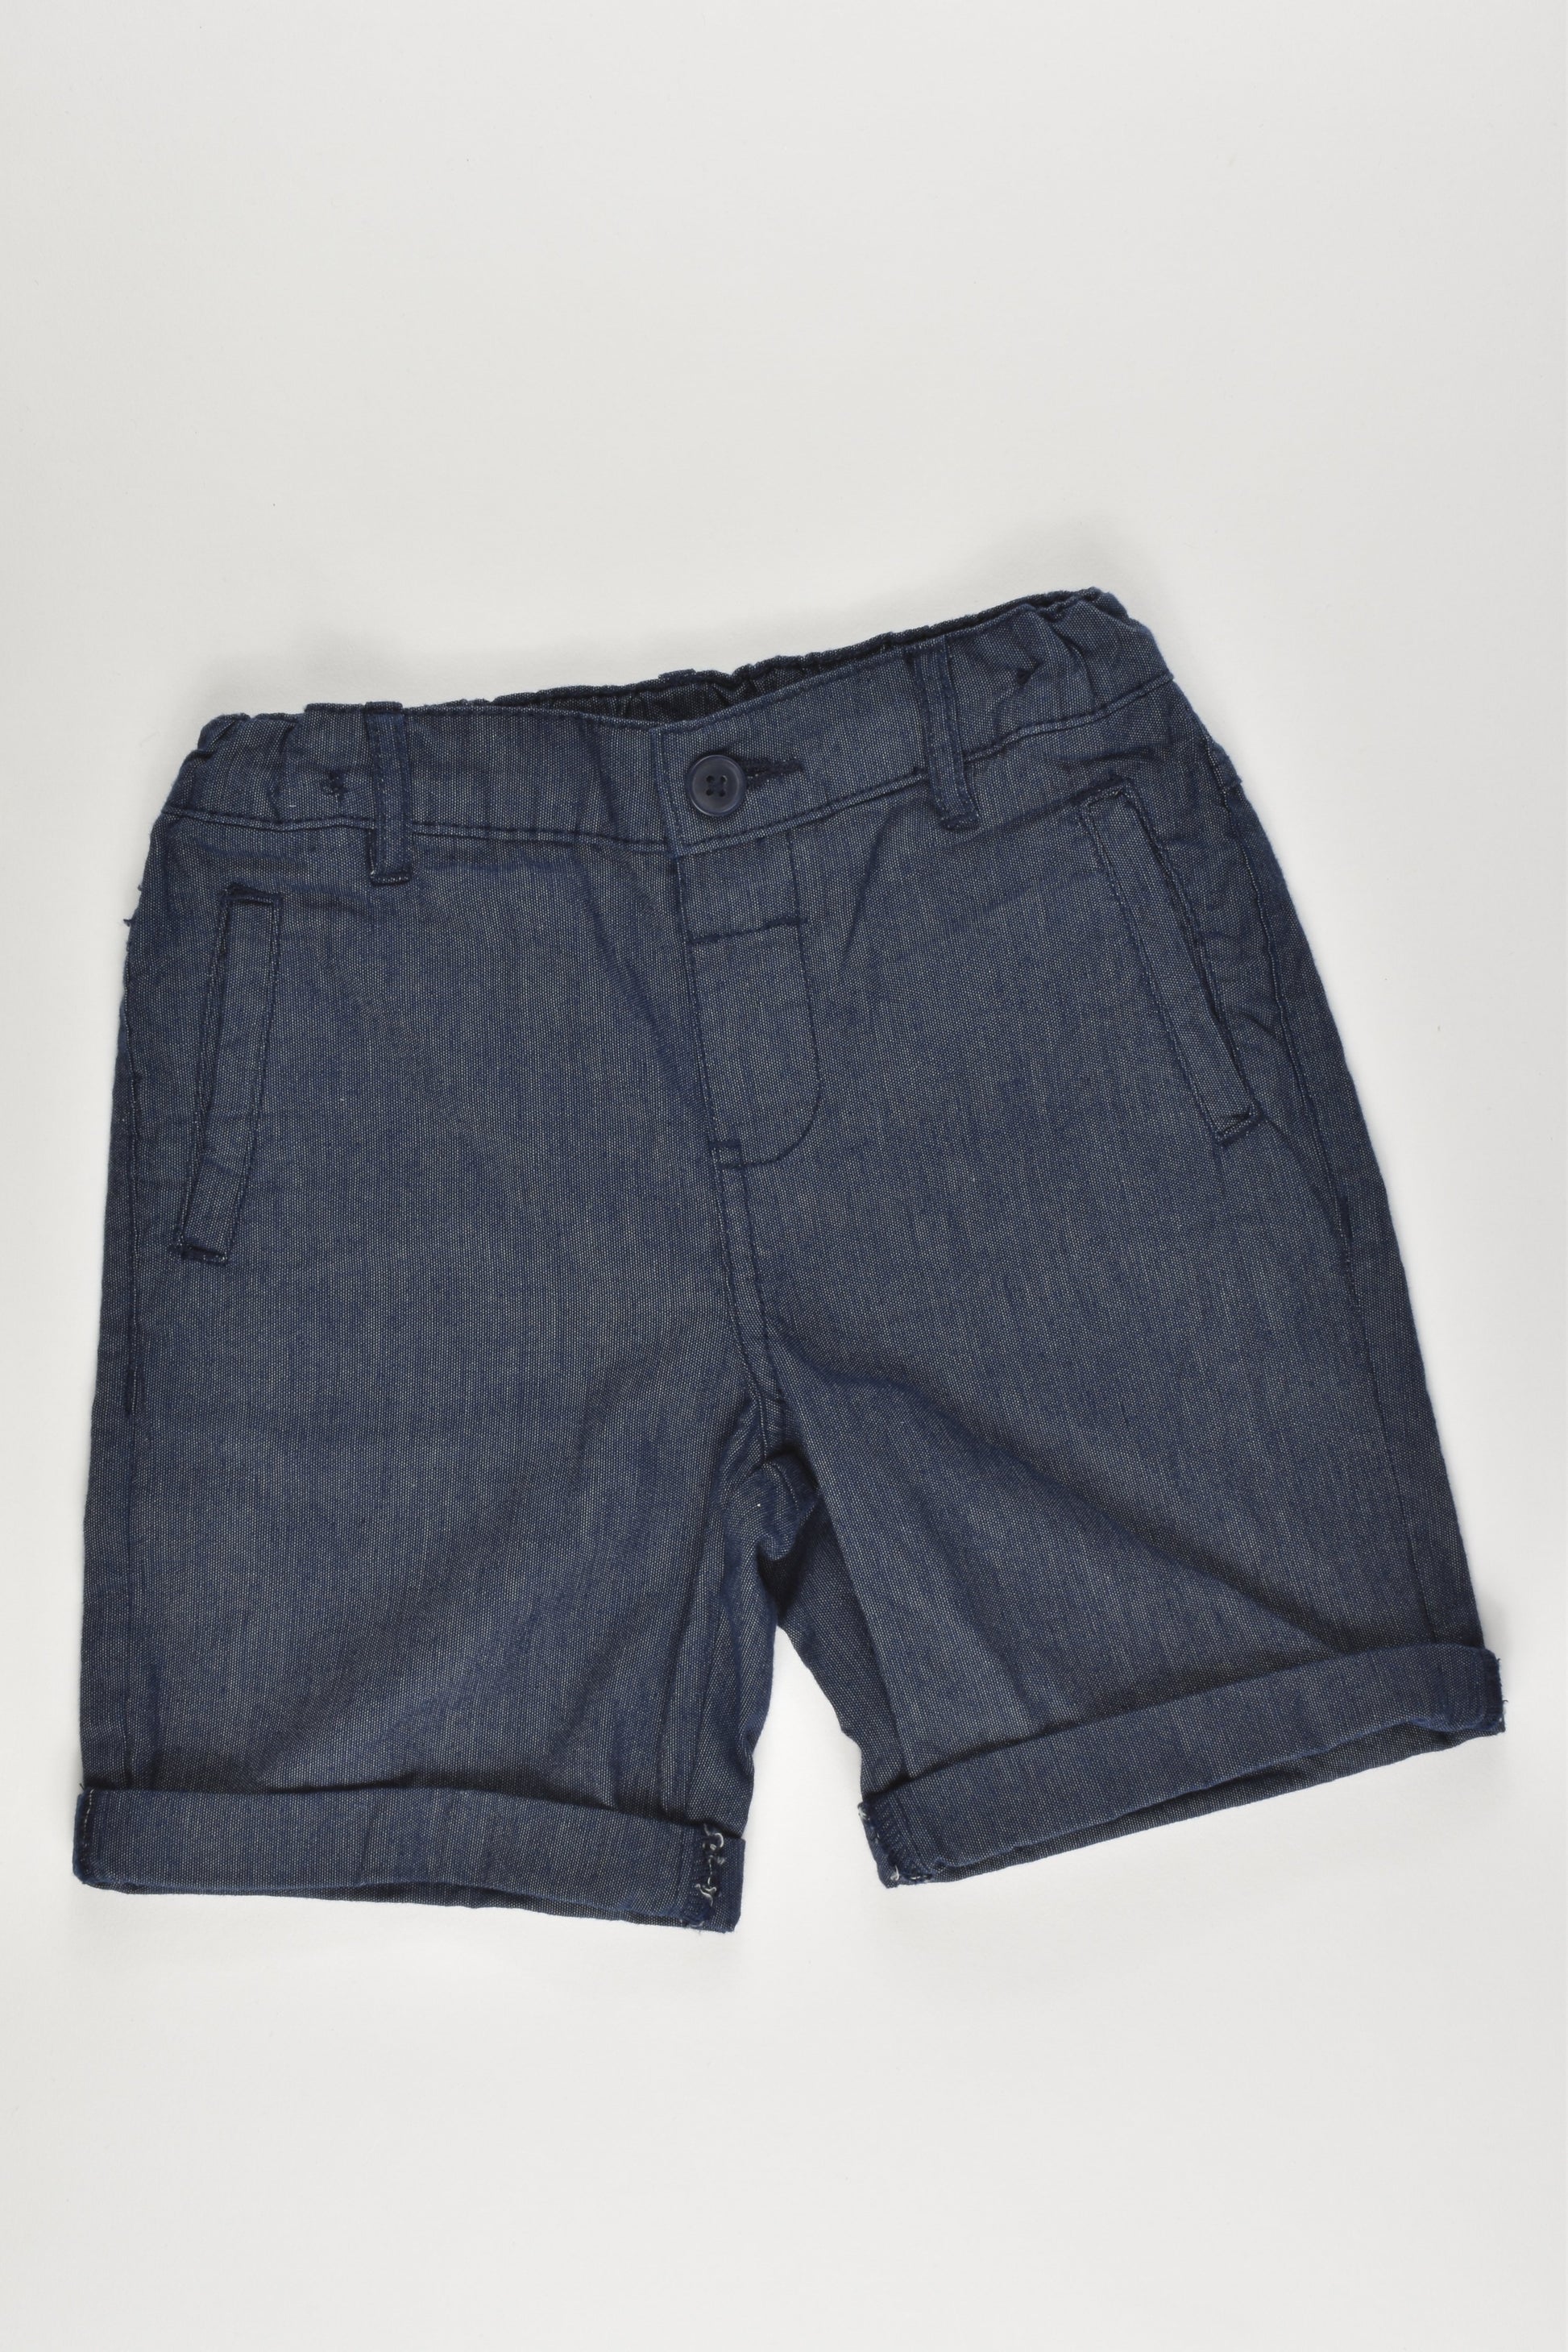 NEW Kids & Co Size 5 Soft Denim Shorts